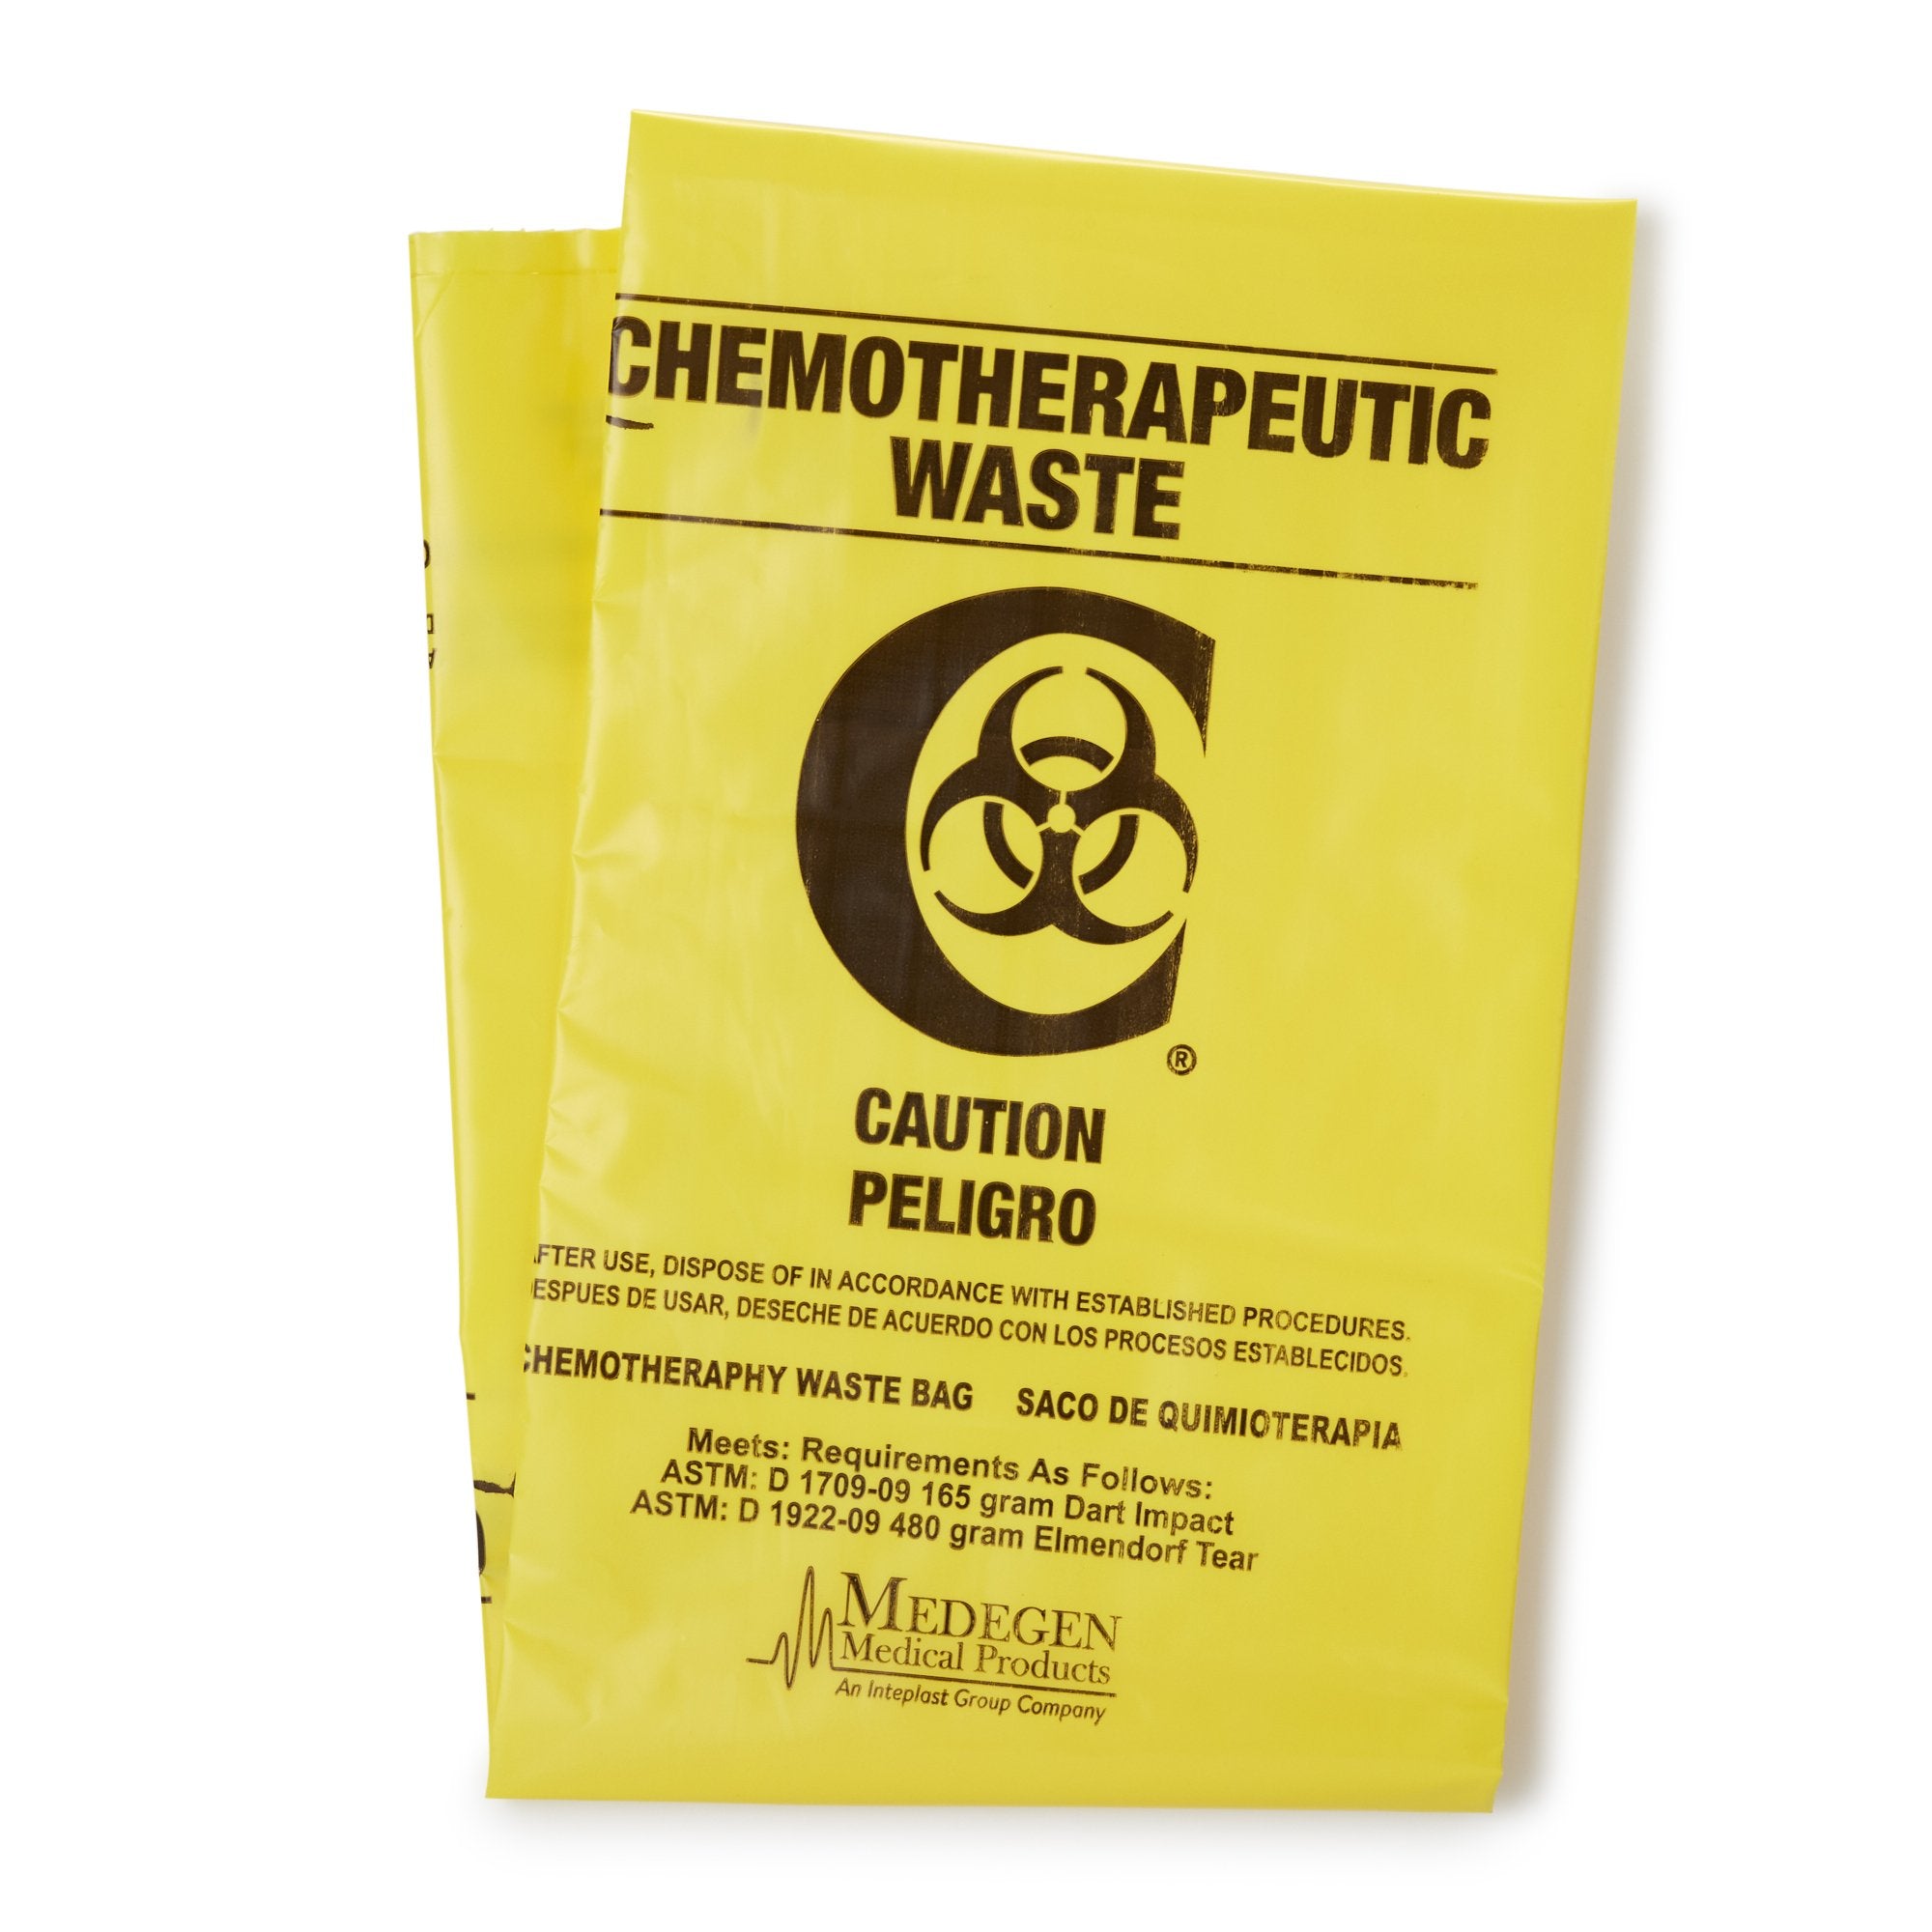 Chemo Waste Bag McKesson 30 to 33 gal. Yellow Bag 31 X 41 Inch